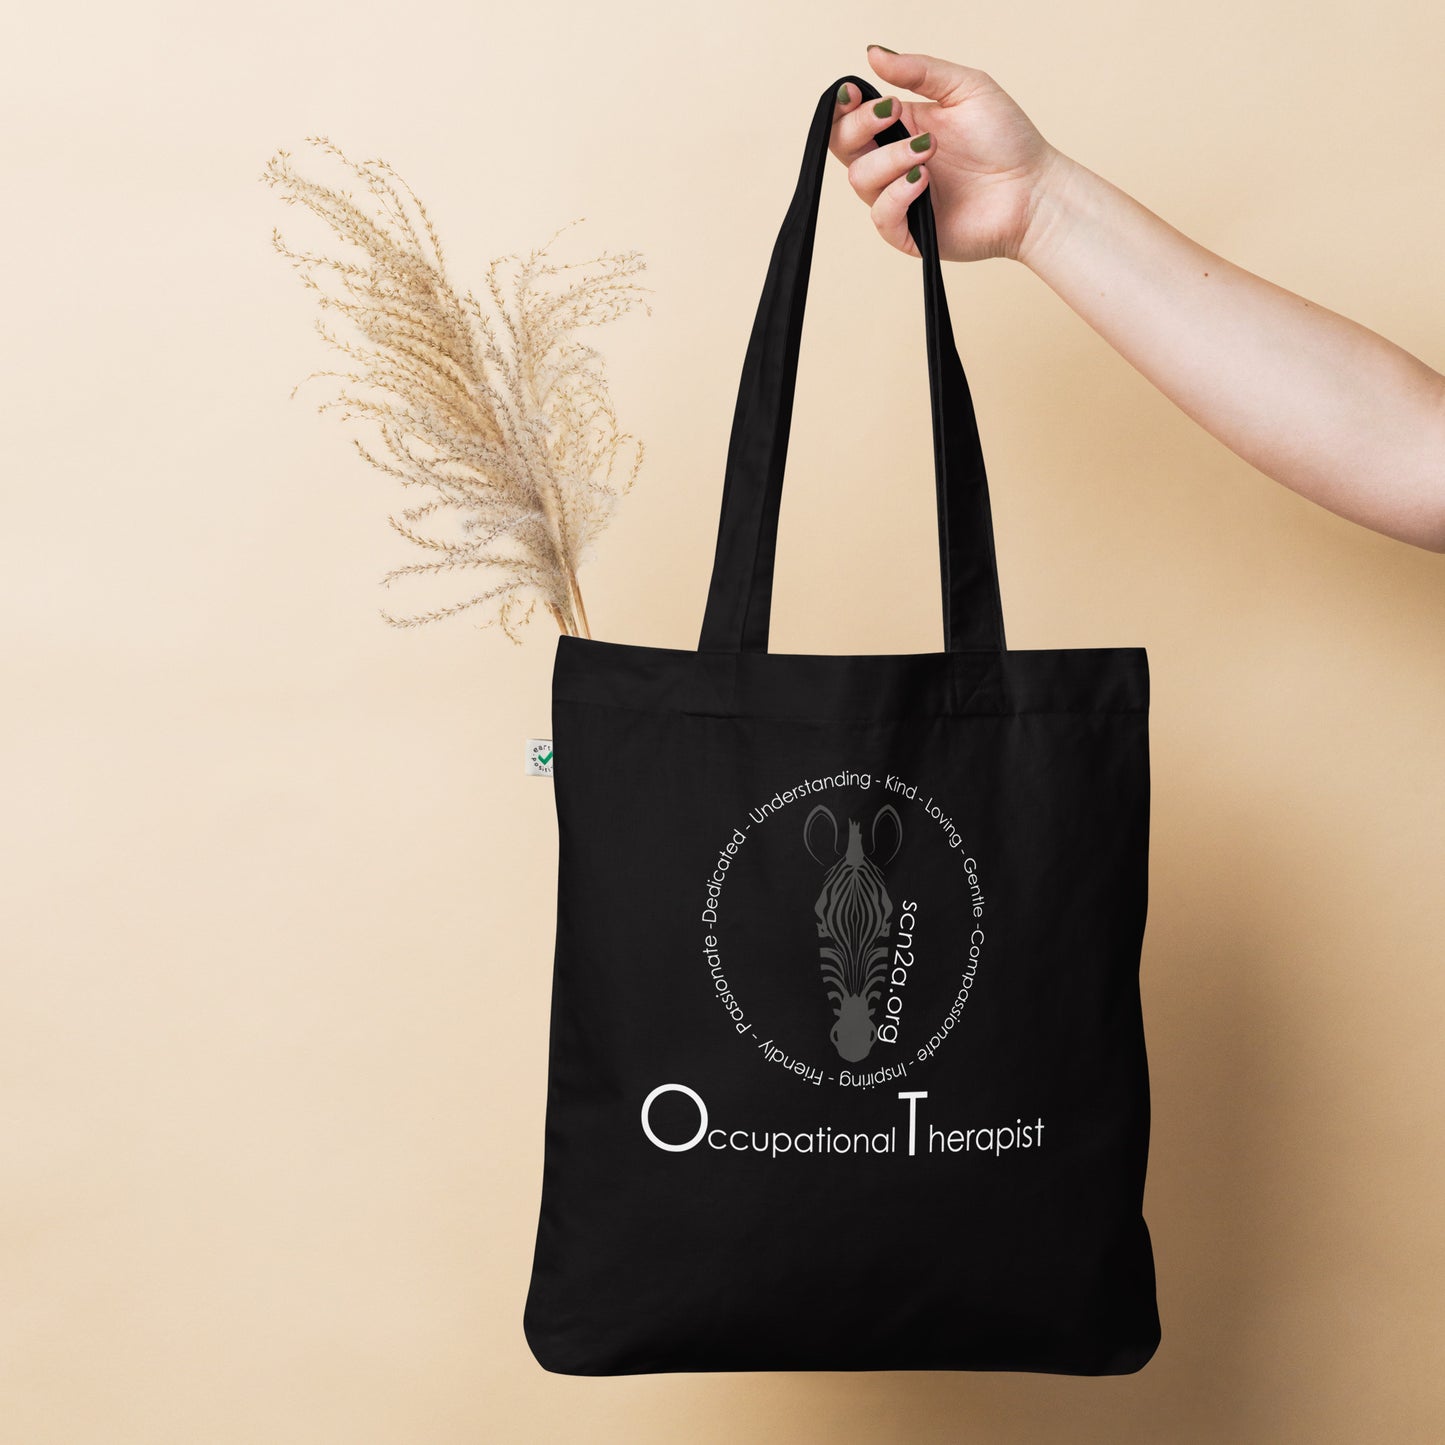 Occupational Therapist Organic fashion tote bag